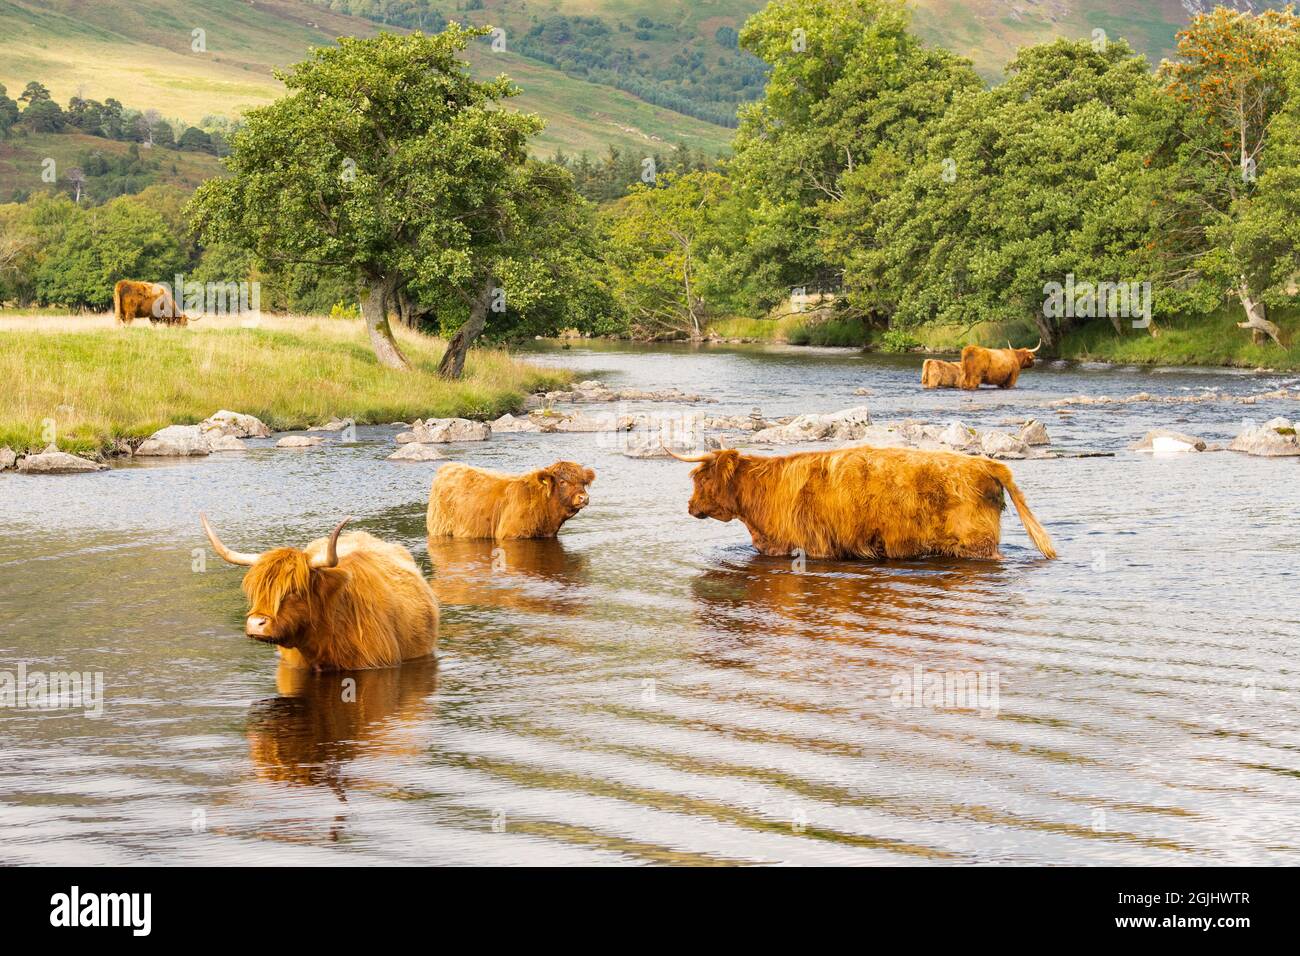 L'Ecosse Highland cattle Banque D'Images